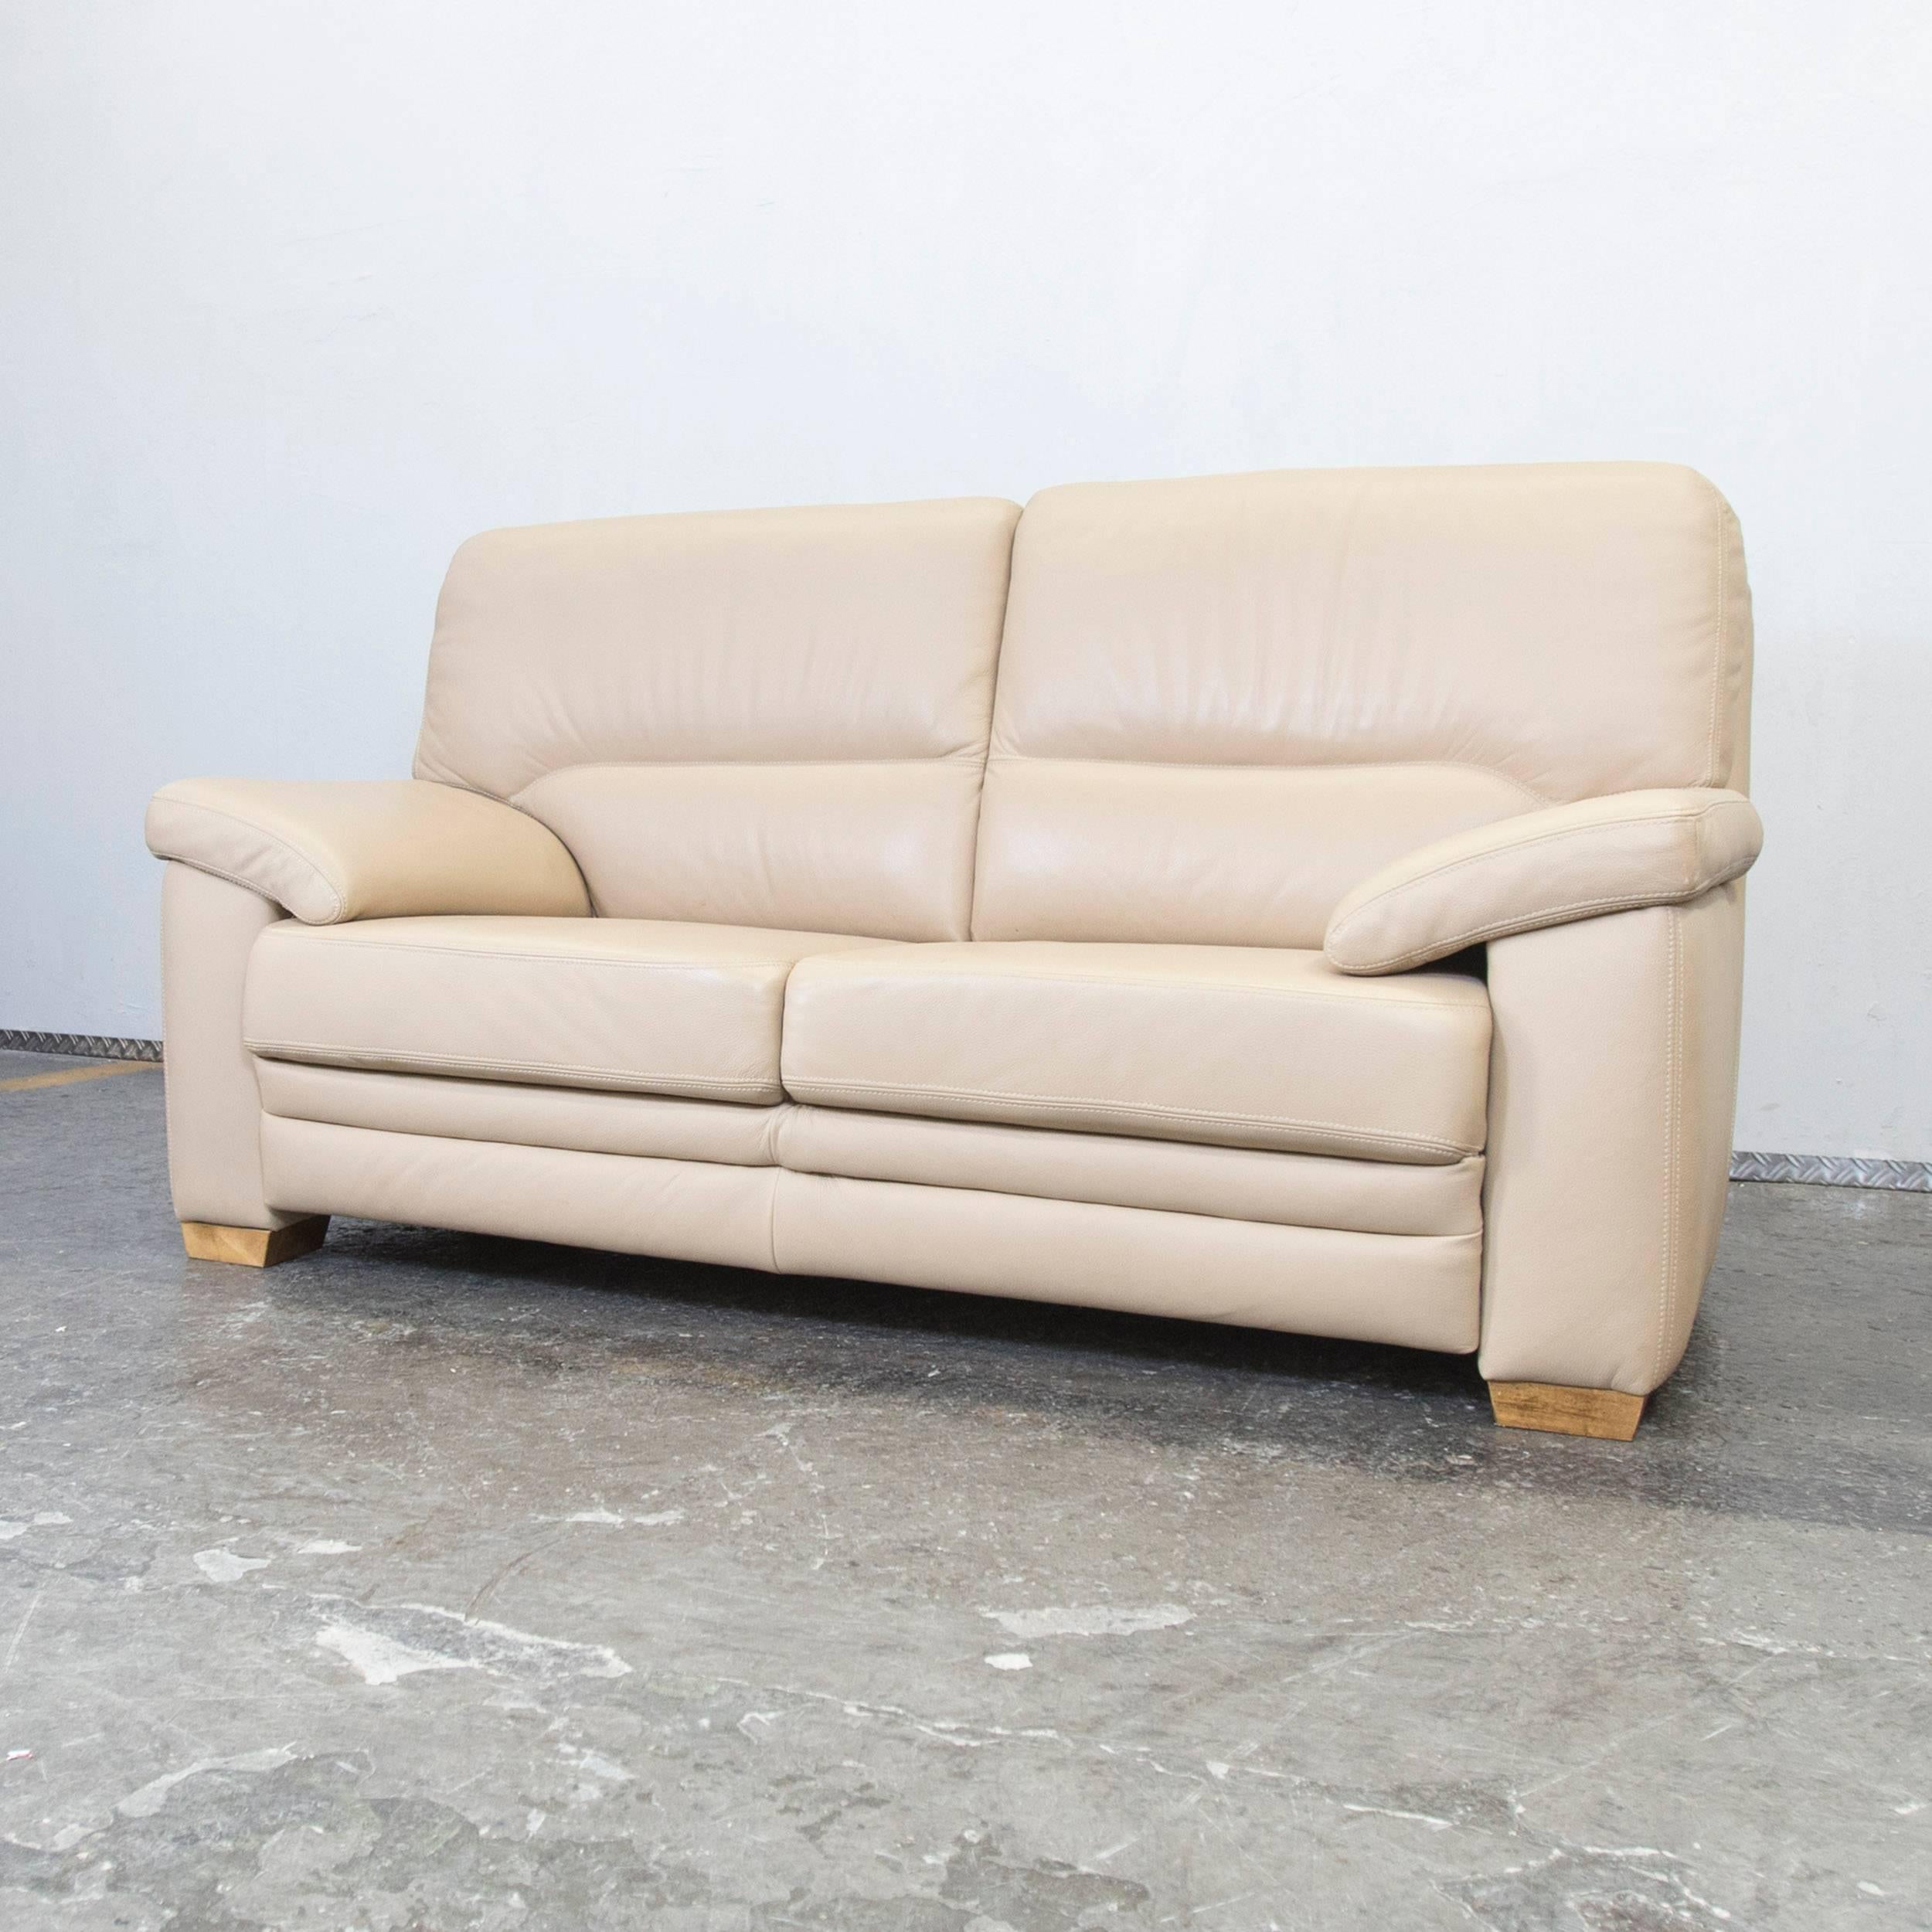 Beige colored designer sofa, with a modern design, designed for pure comfort.